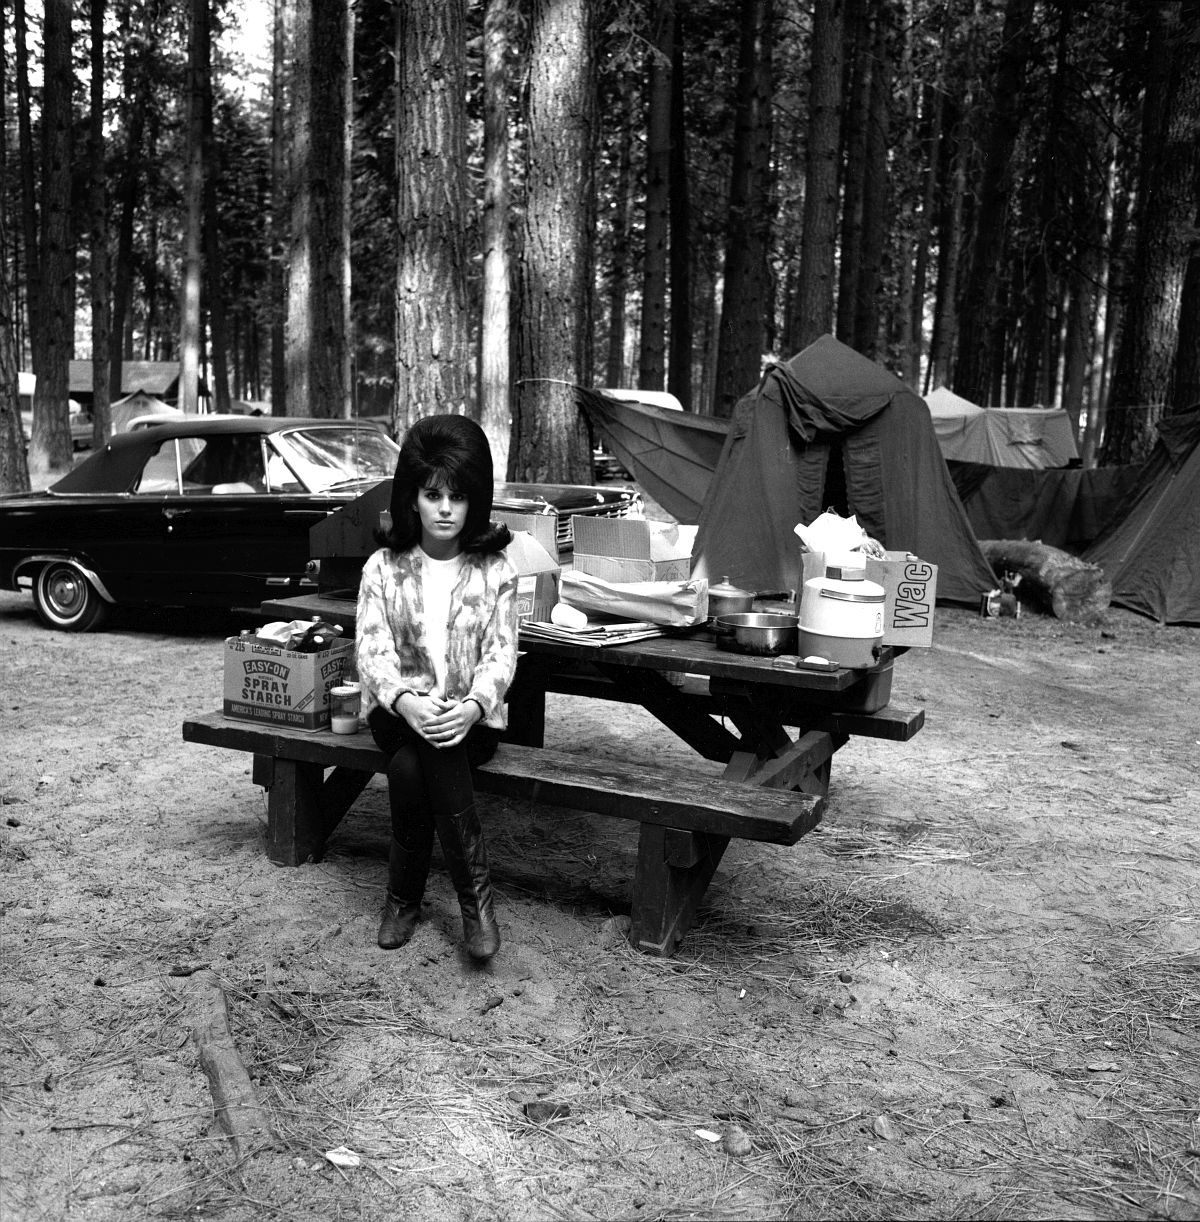 Yosemite, California, 1965